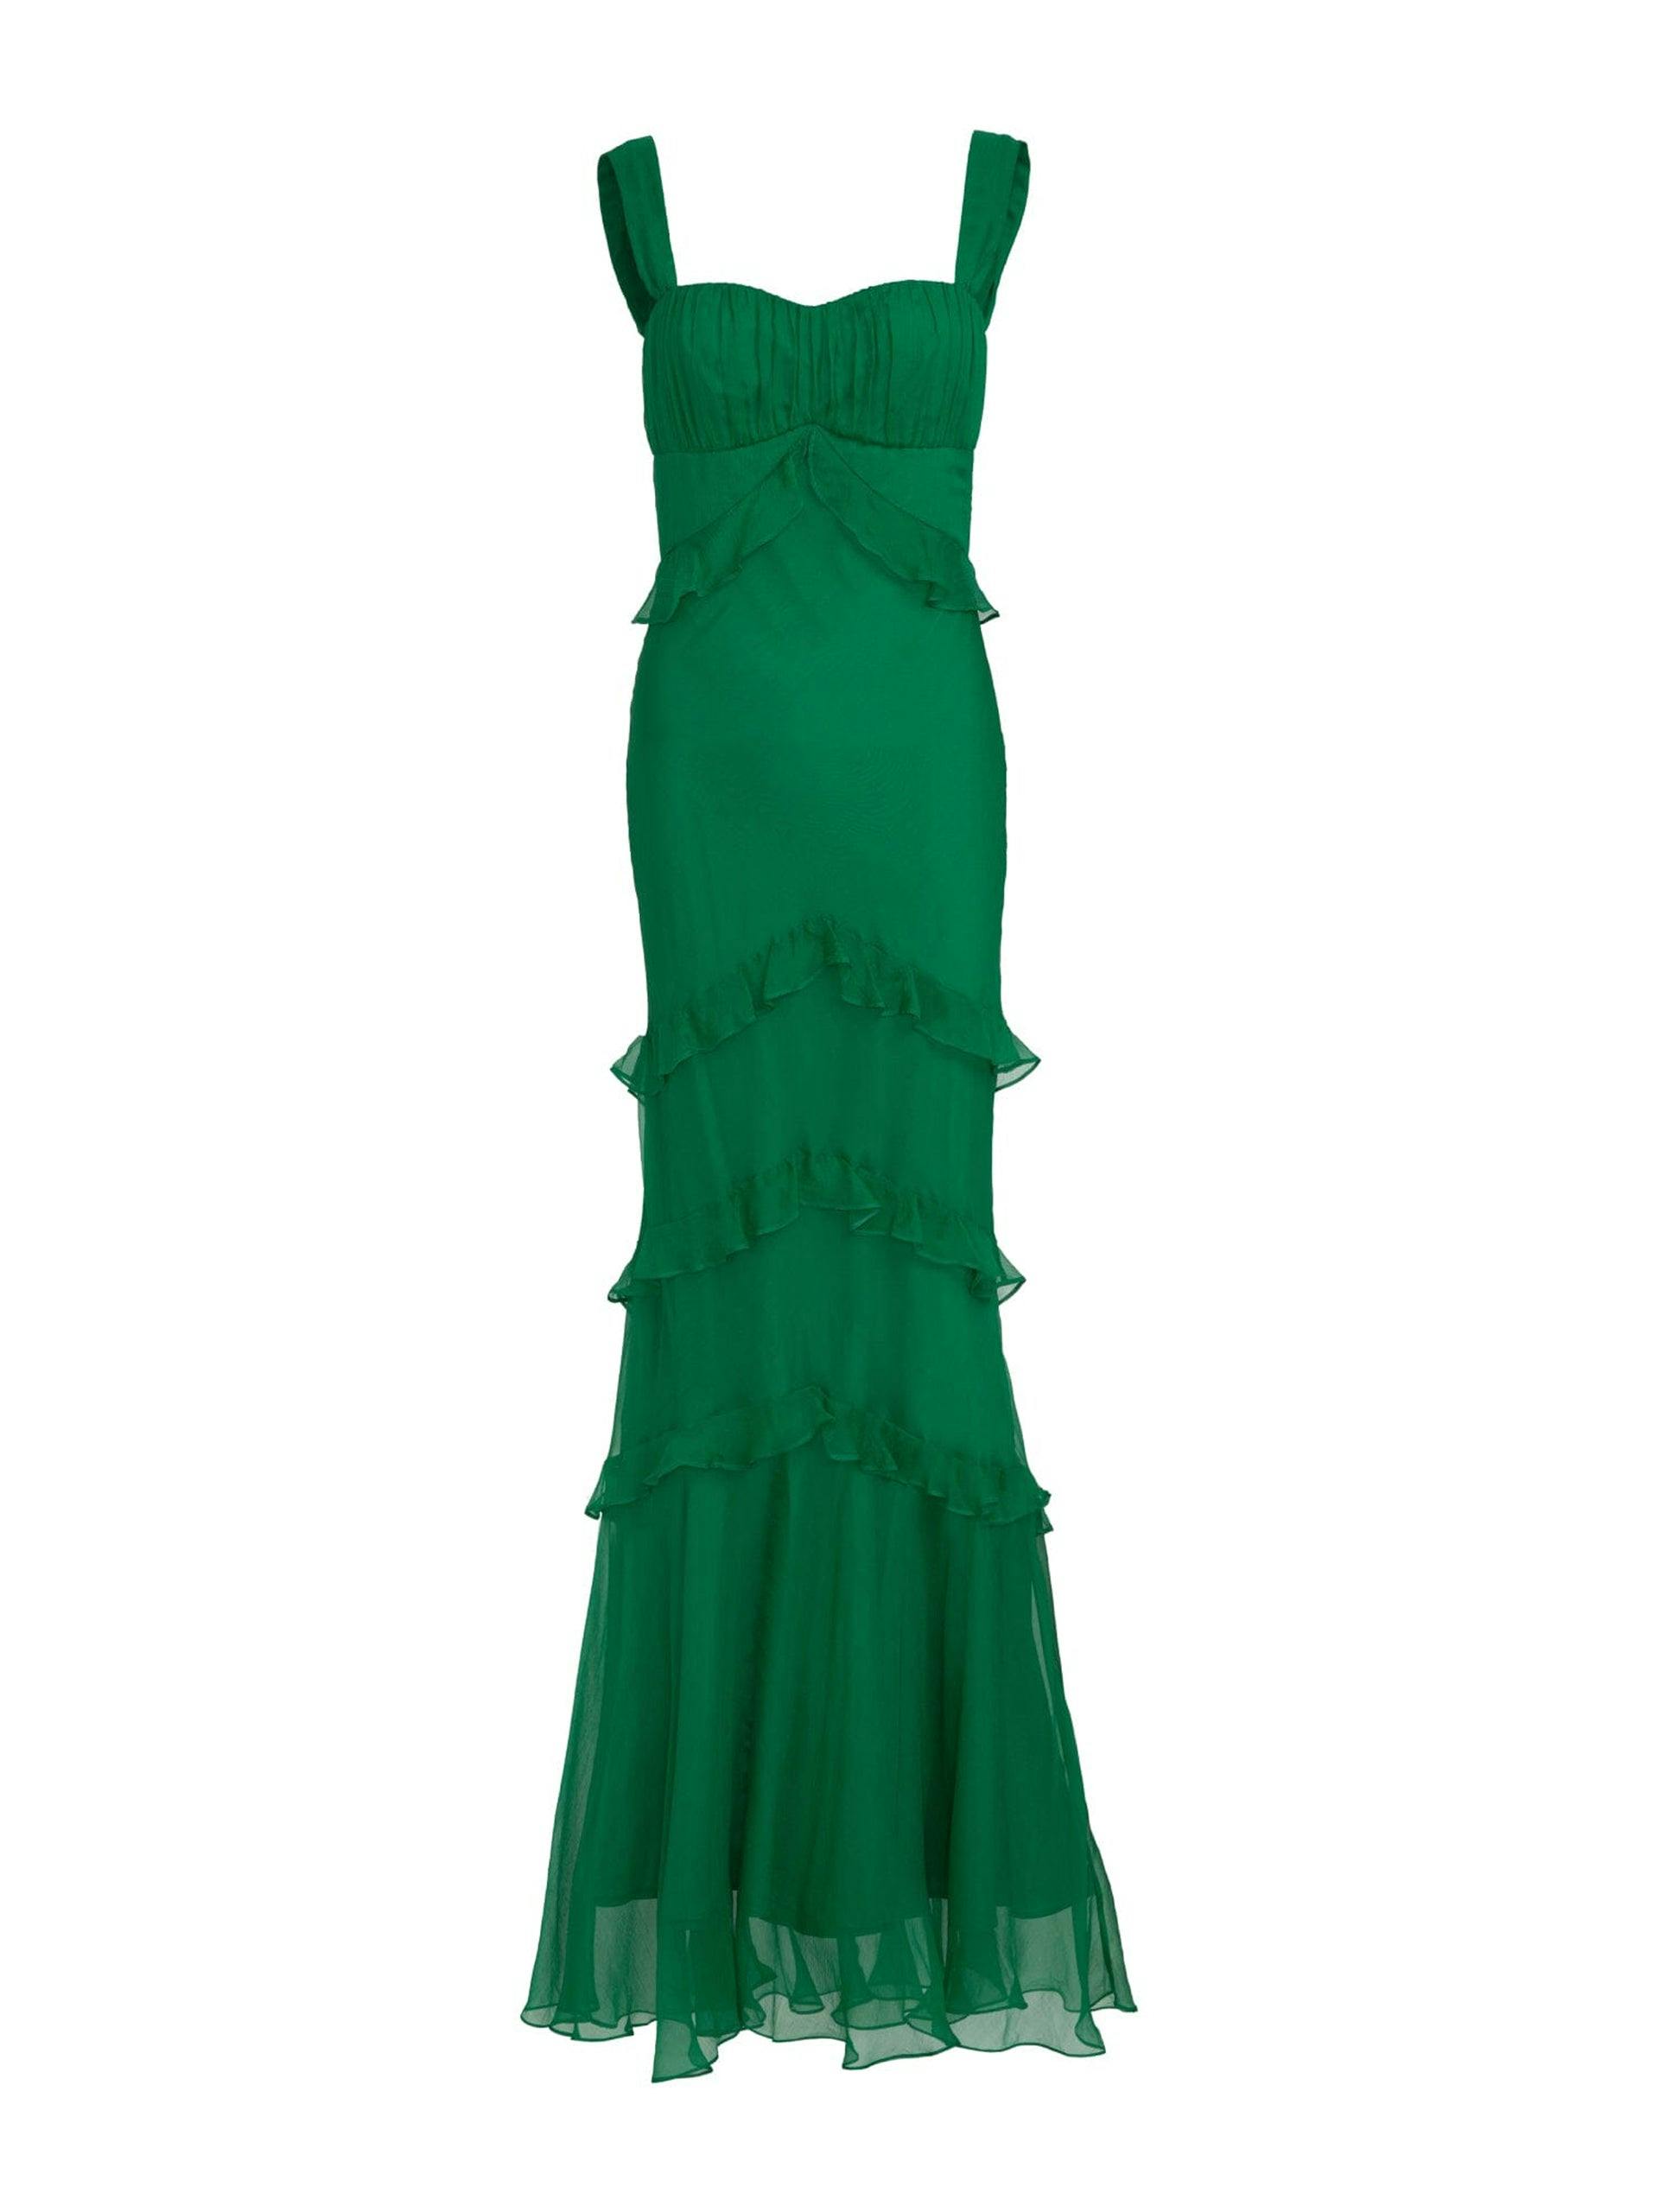 Chandra dress in emerald green